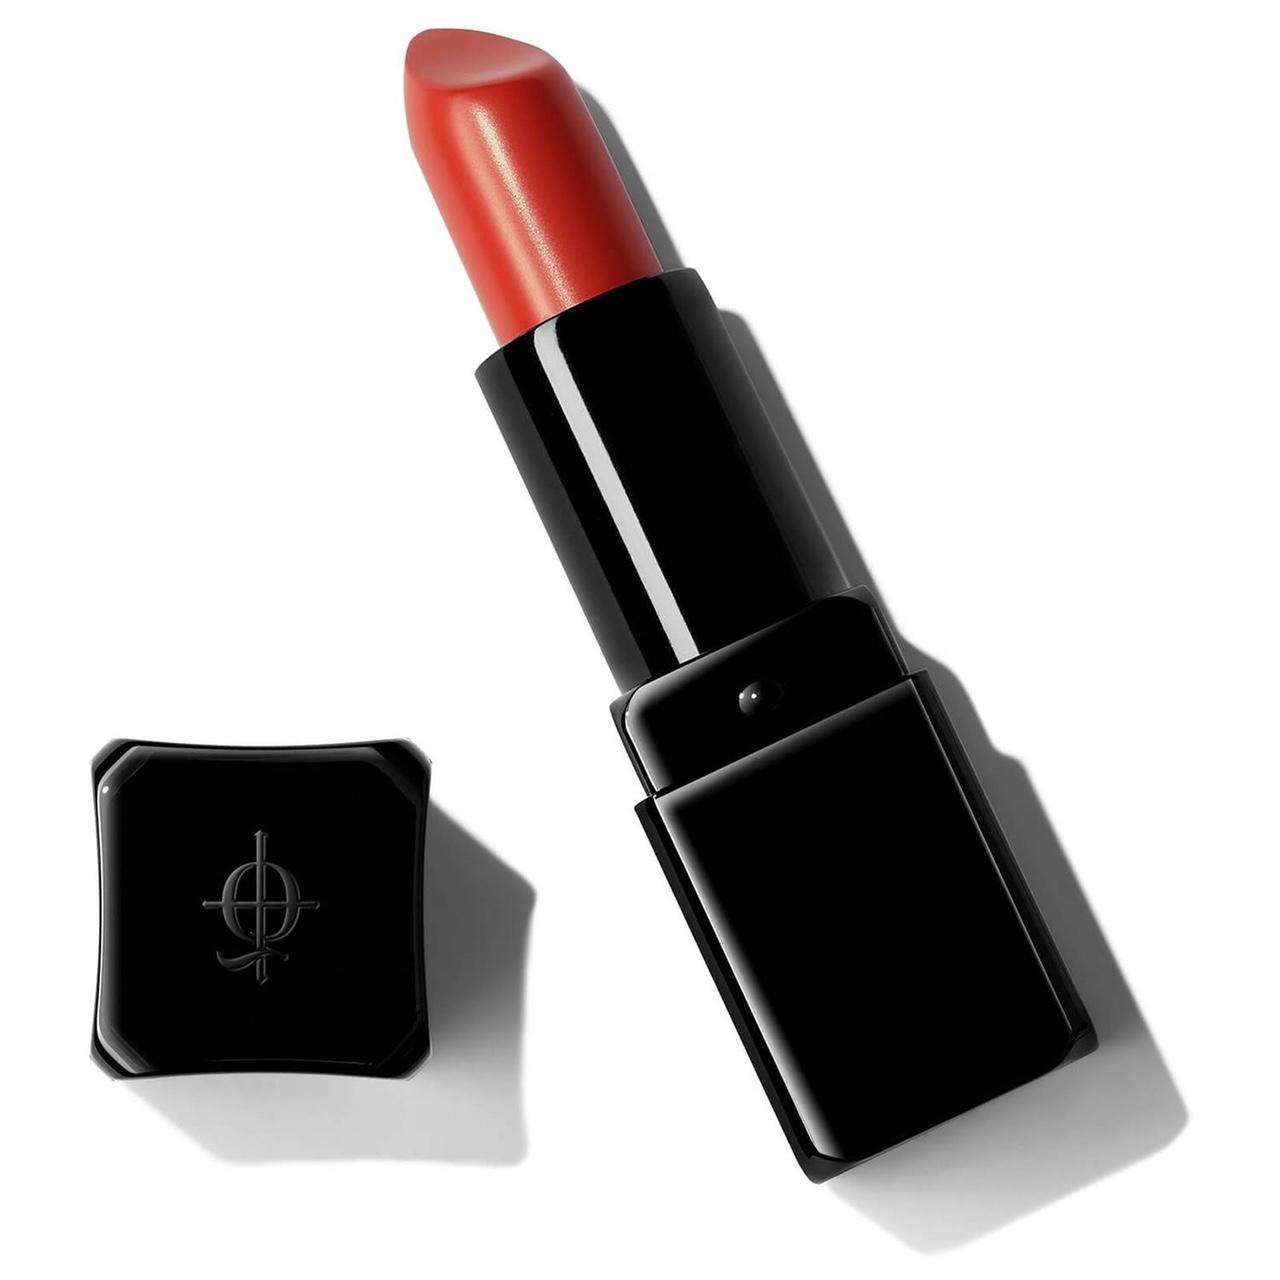 Product Image 2 - Illamasqua Antimatter Lipstick in Midnight

This